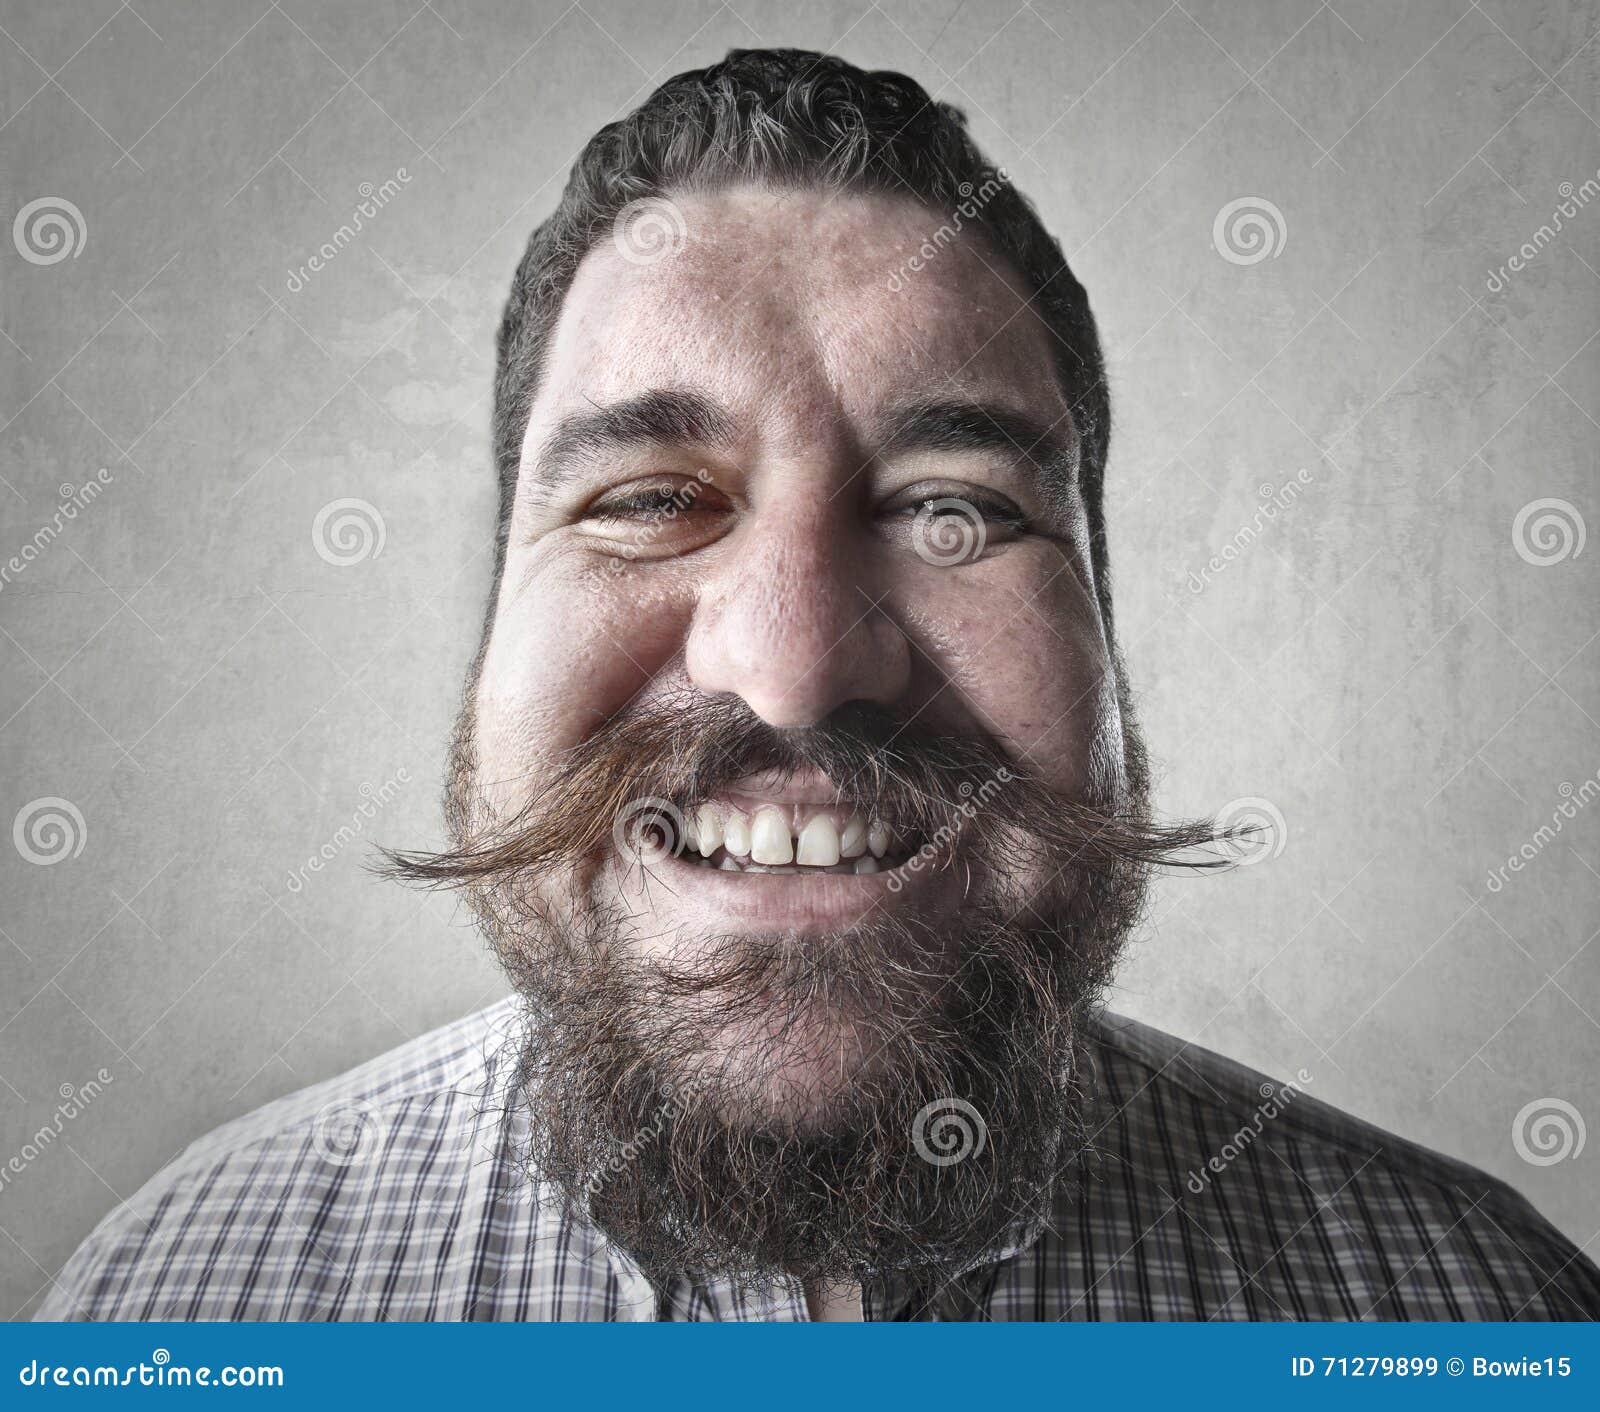 happy-man-portrait-mustache-71279899.jpg